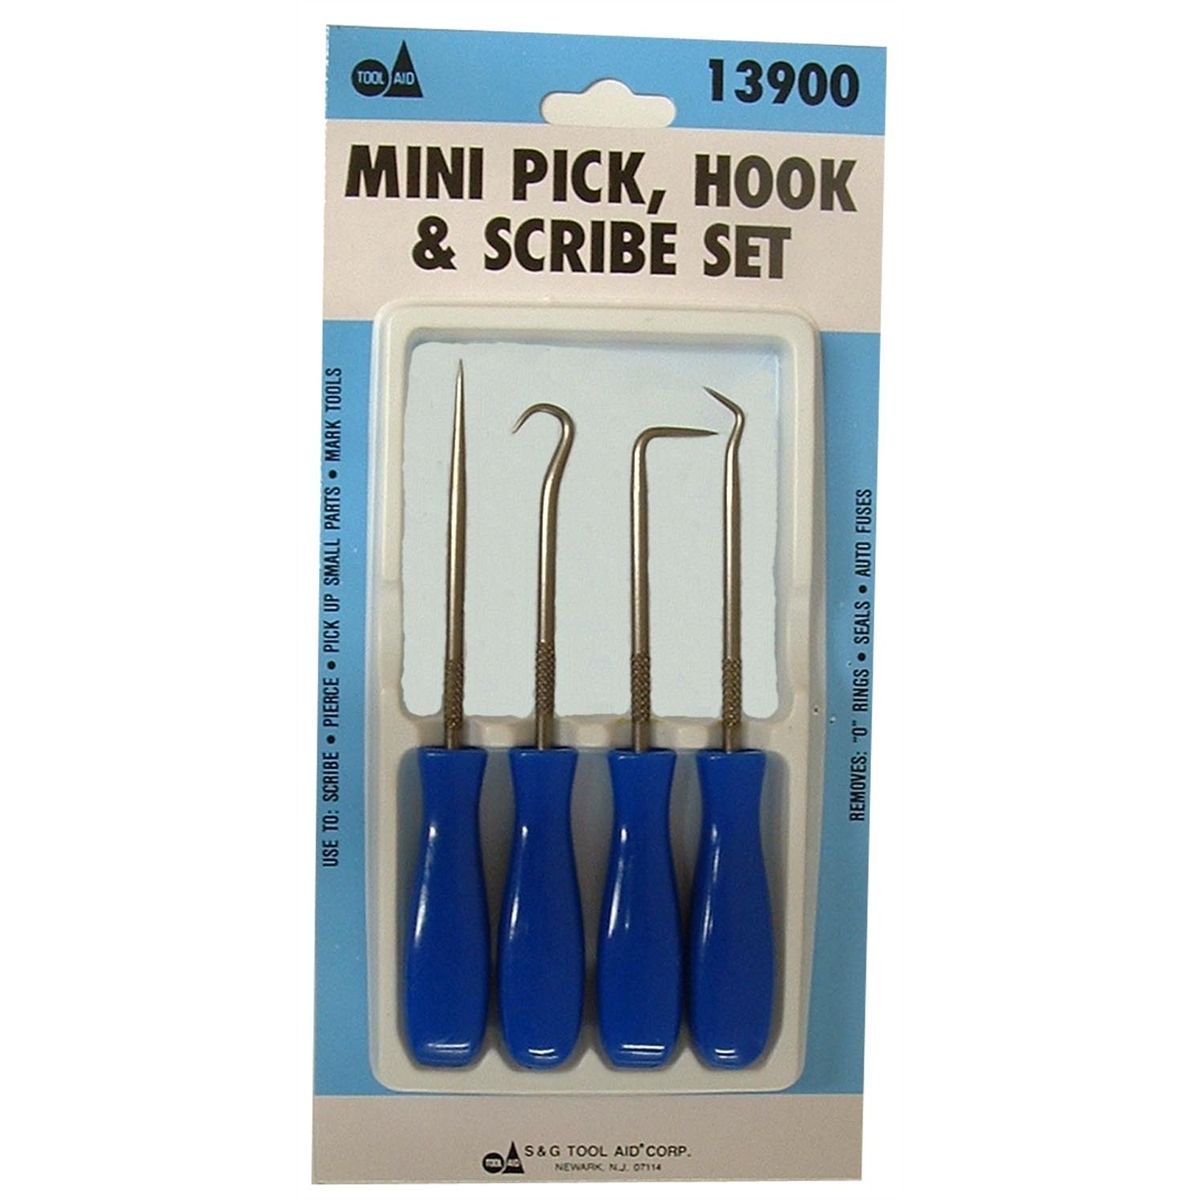 Mini Pick, Hook & Scribe Set 4 Pc